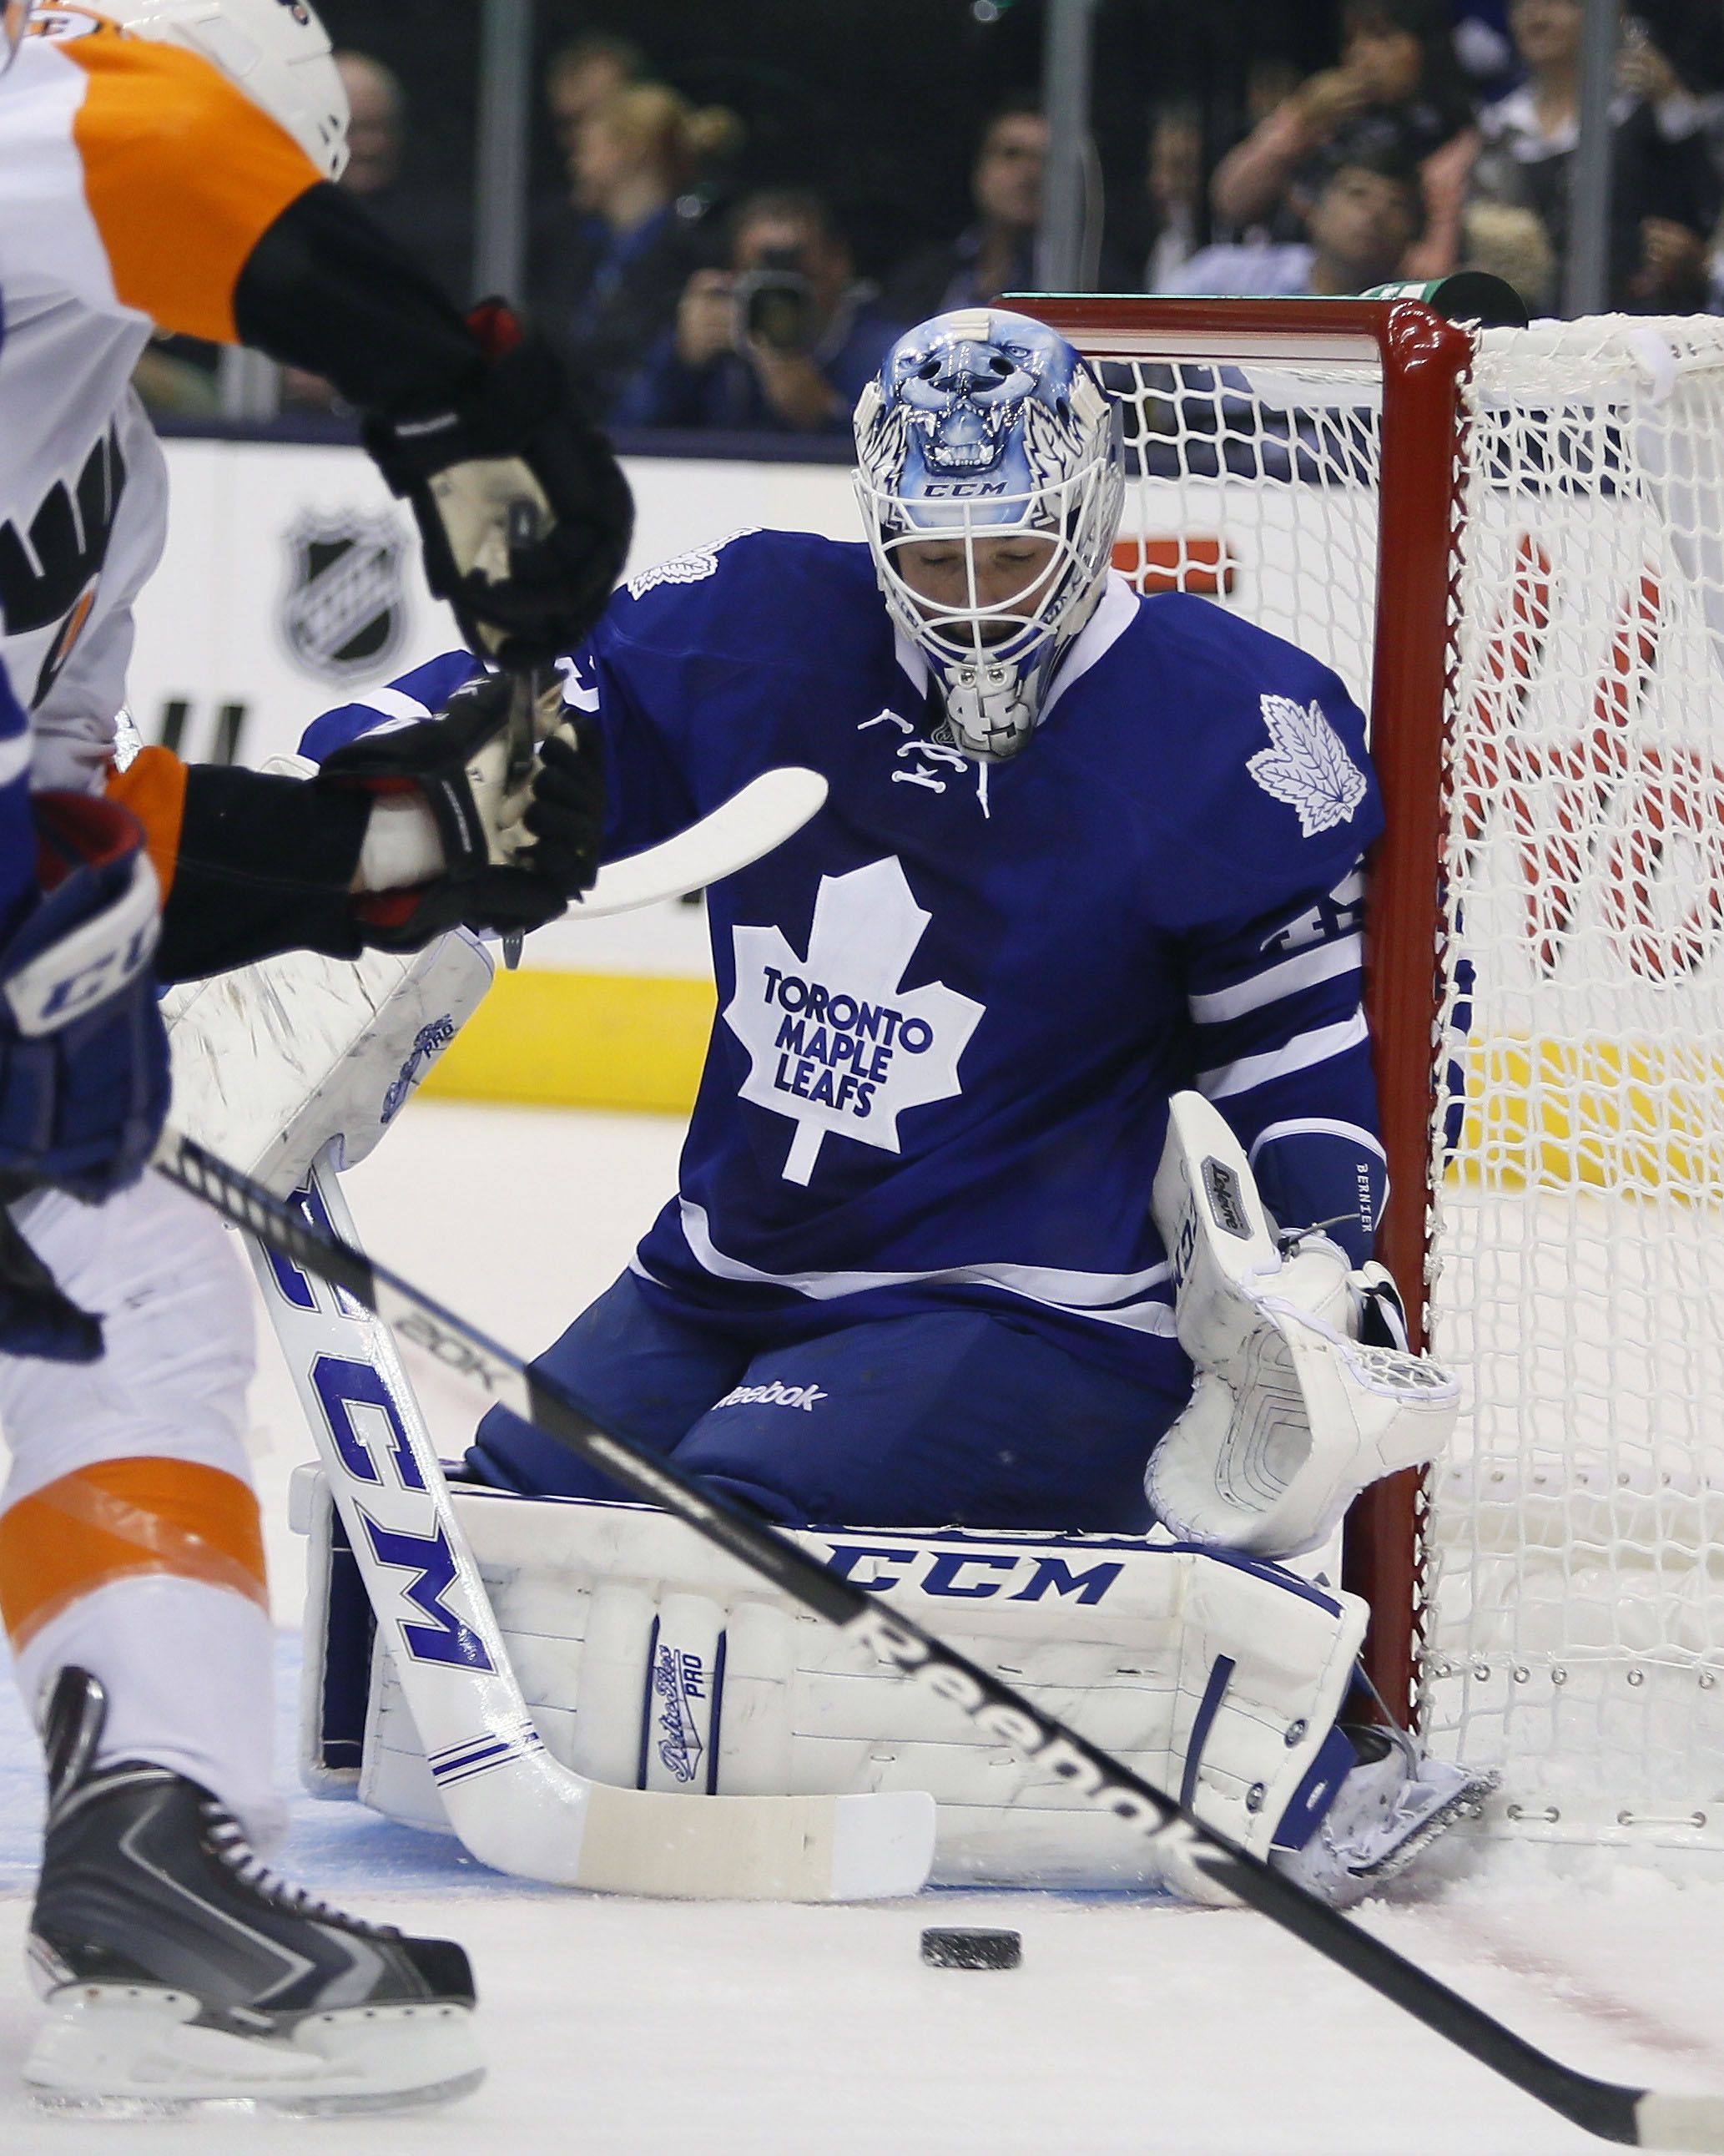 CrowdCam Hot Shot: Toronto Maple Leafs goaltender Jonathan Bernier